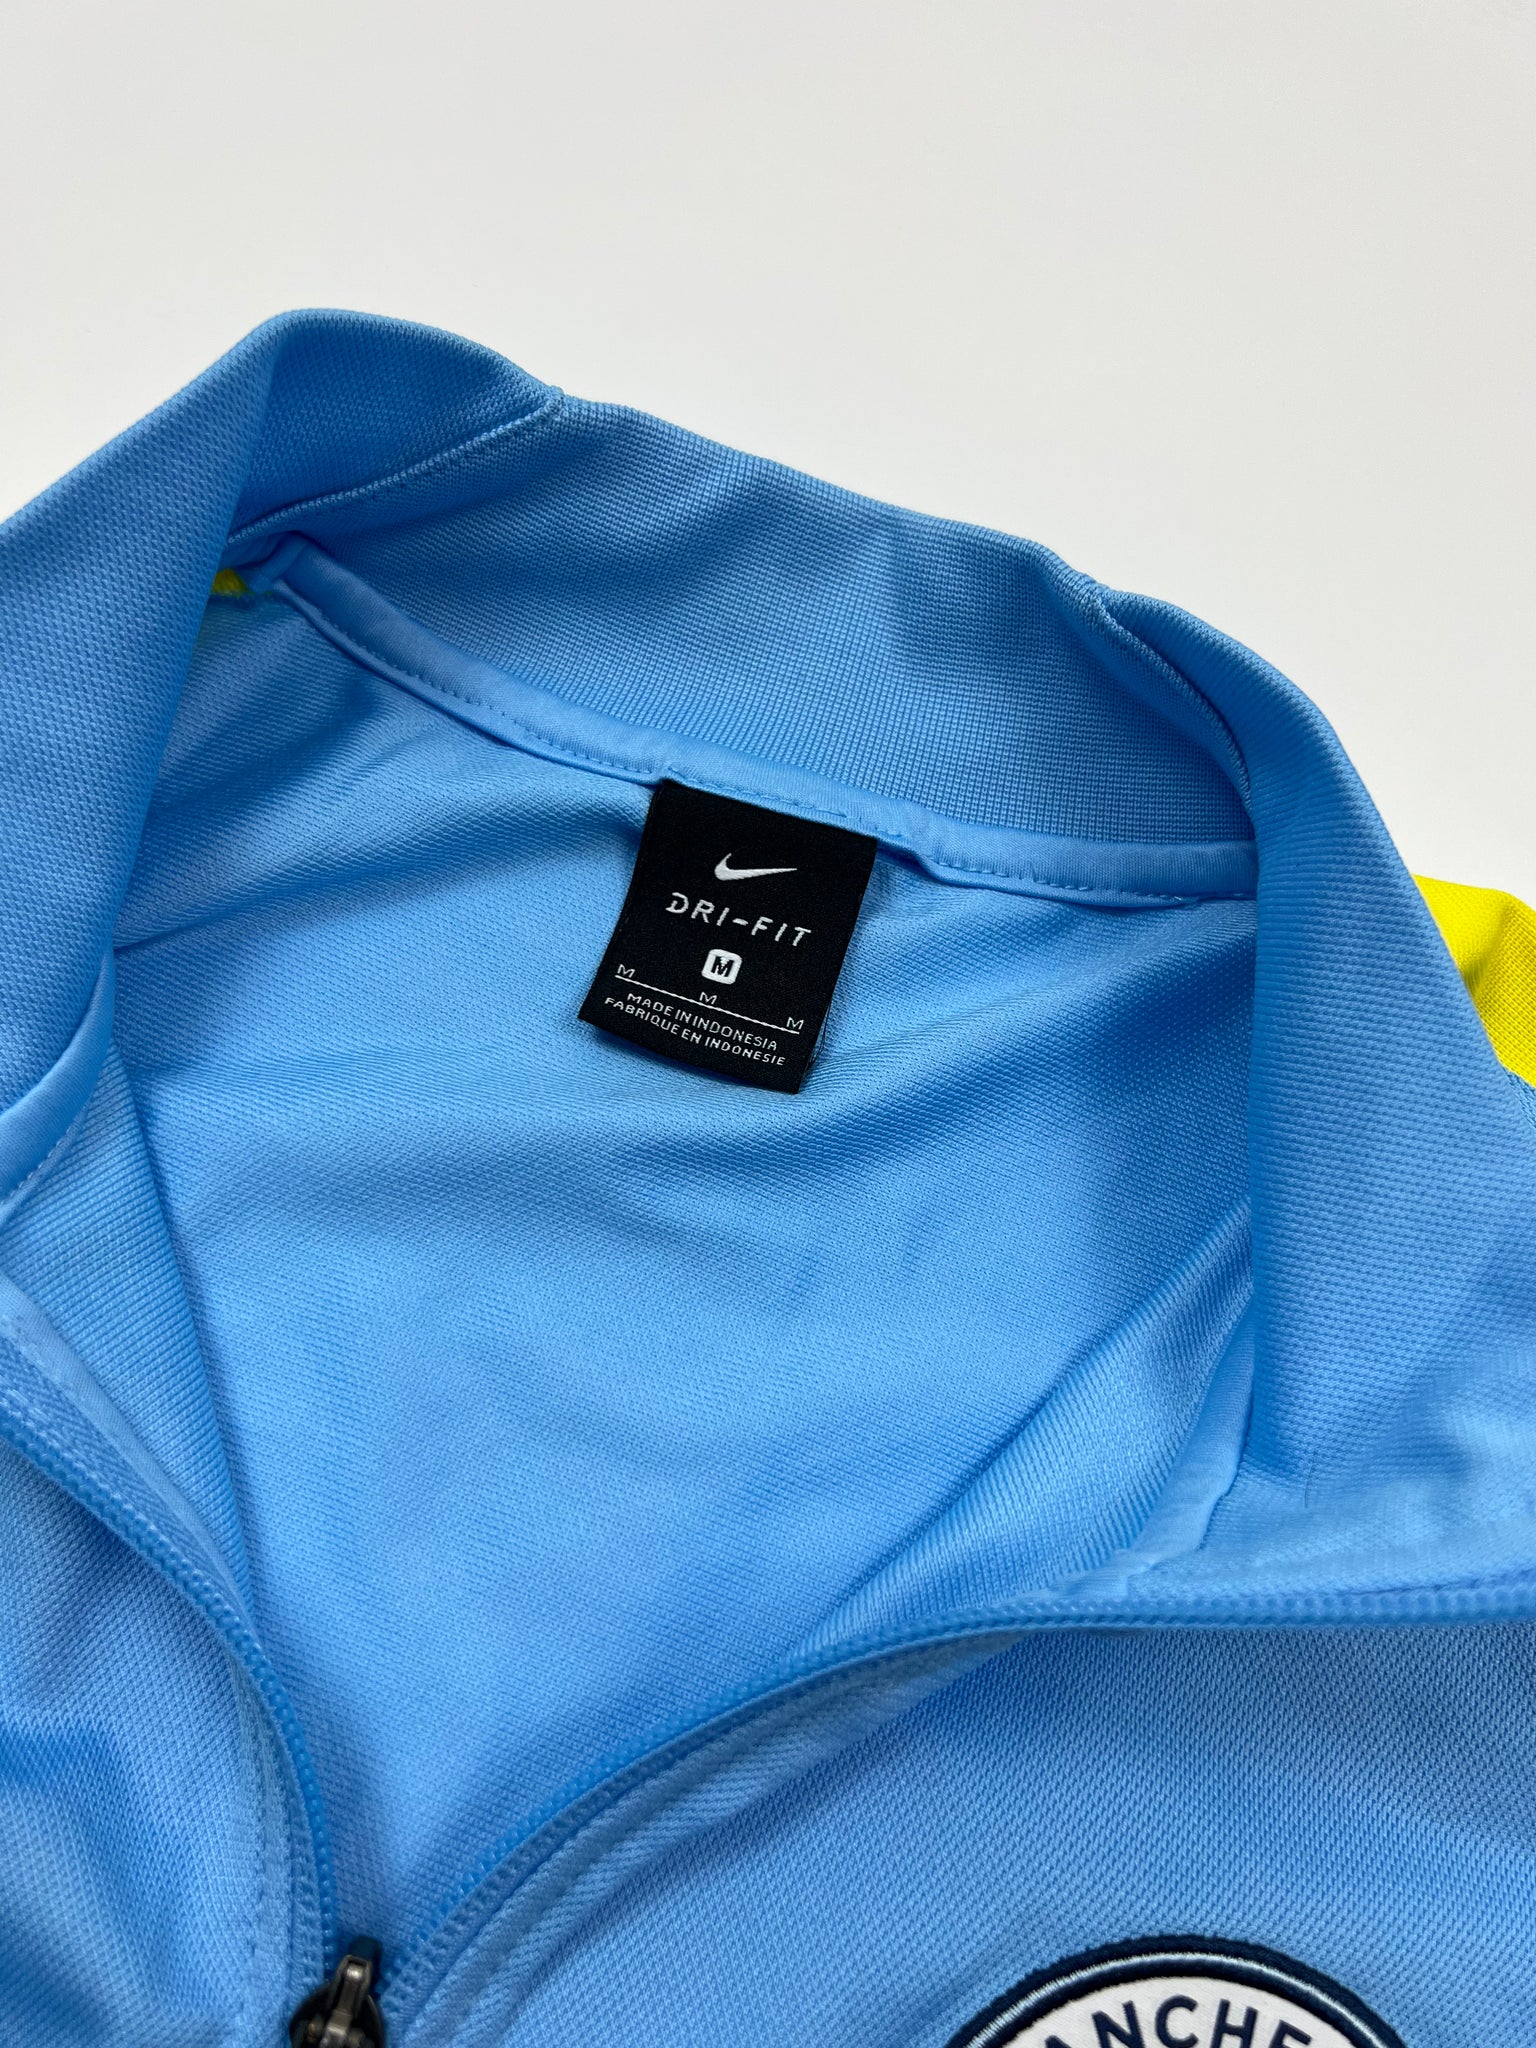 Nike Manchester City Track Jacket (M)